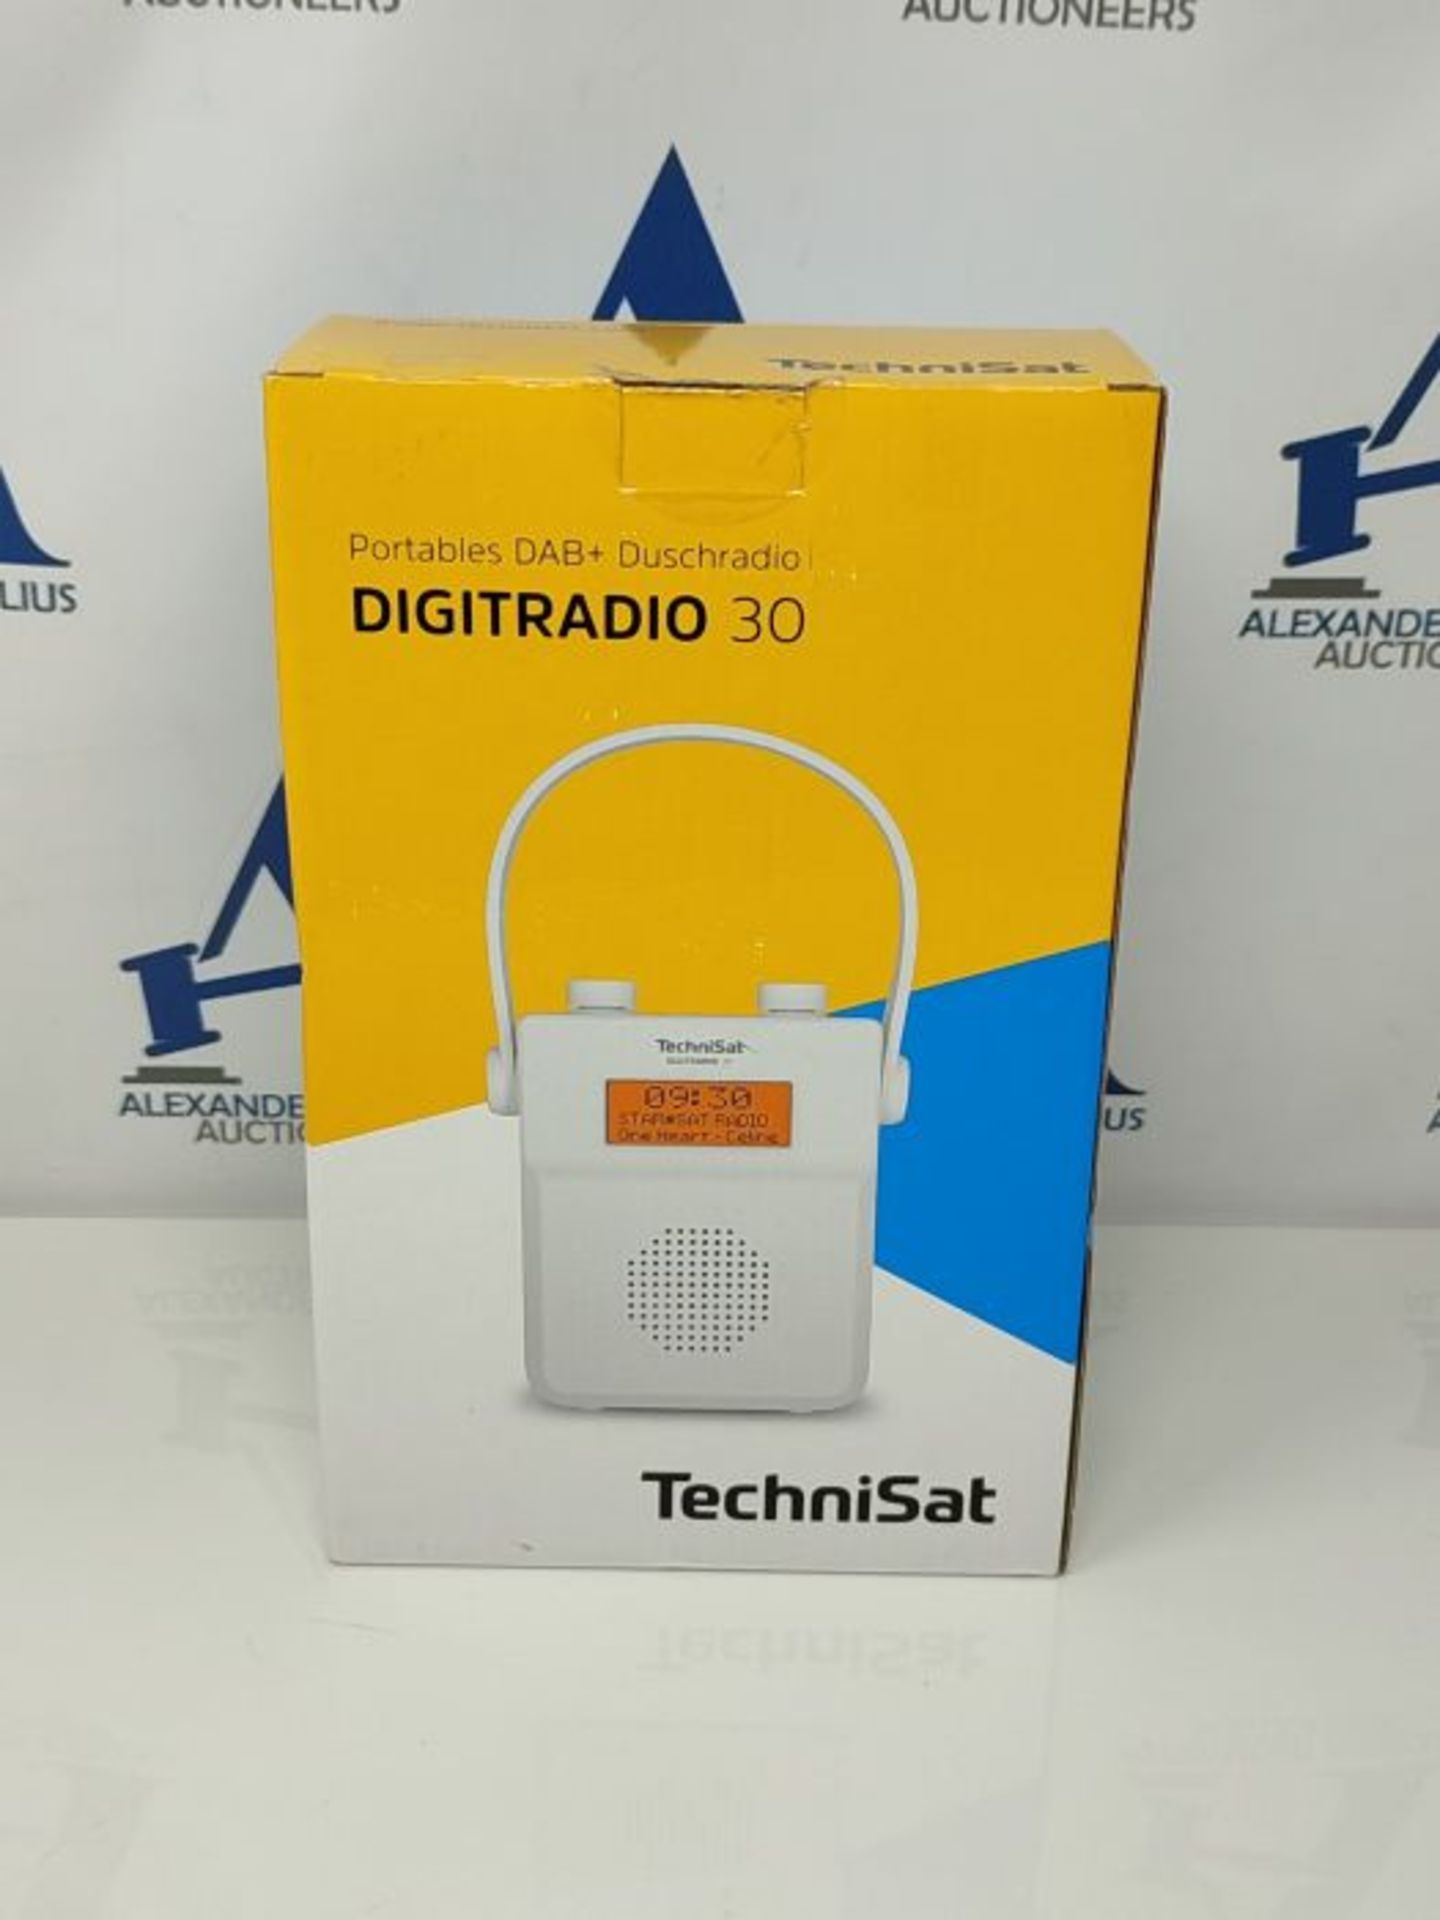 RRP £66.00 TechniSat Digittradio 30 Waterdichte DAB+ douche-radio (FM, DAB digitale radio, ge?nte